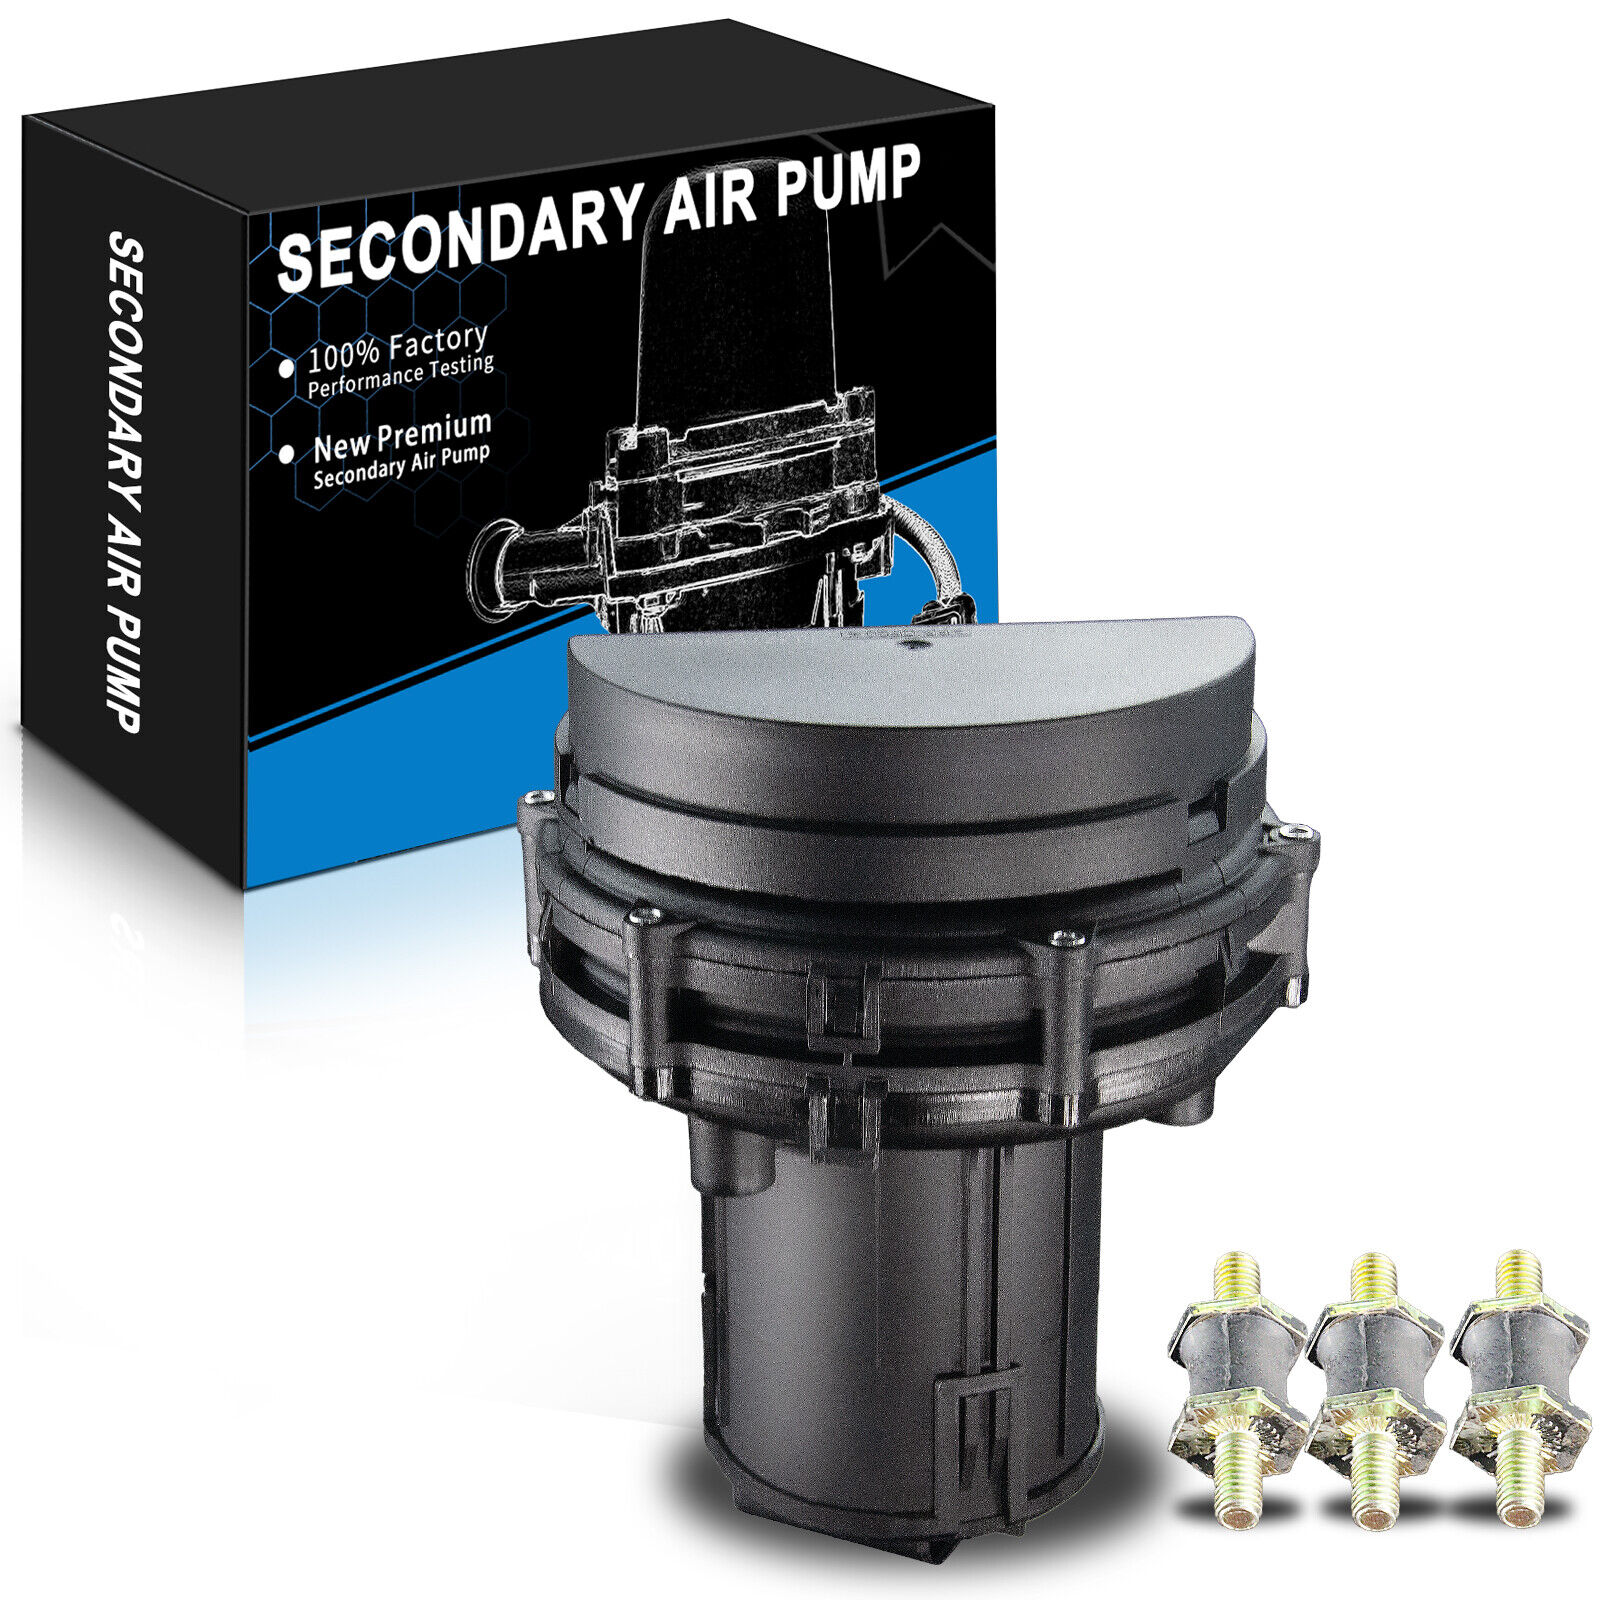 Secondary Air Pump Fit for BMW 3 Series 323i 325i 328i 330i 325Ci 11727553056